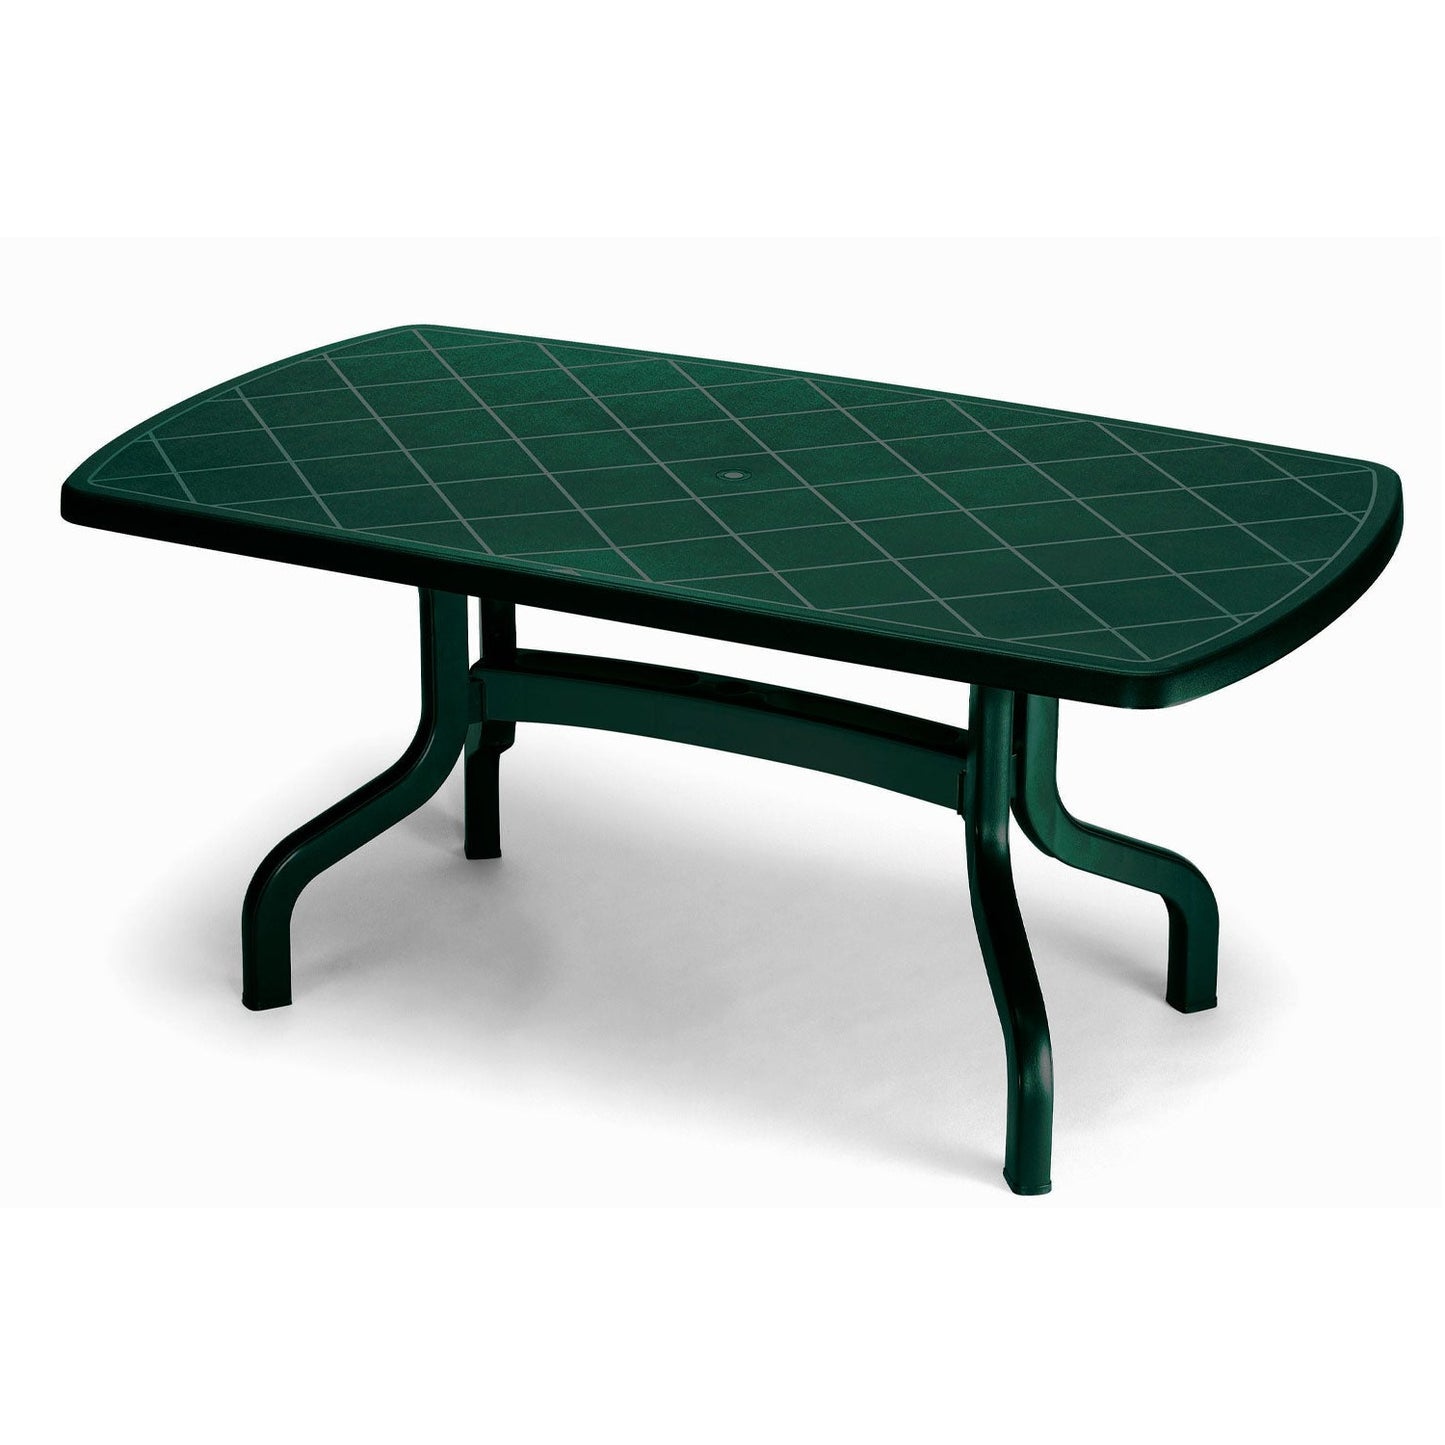 Ribalto 160cm x 90cm Folding Rectangular Dining Table by Scab Design